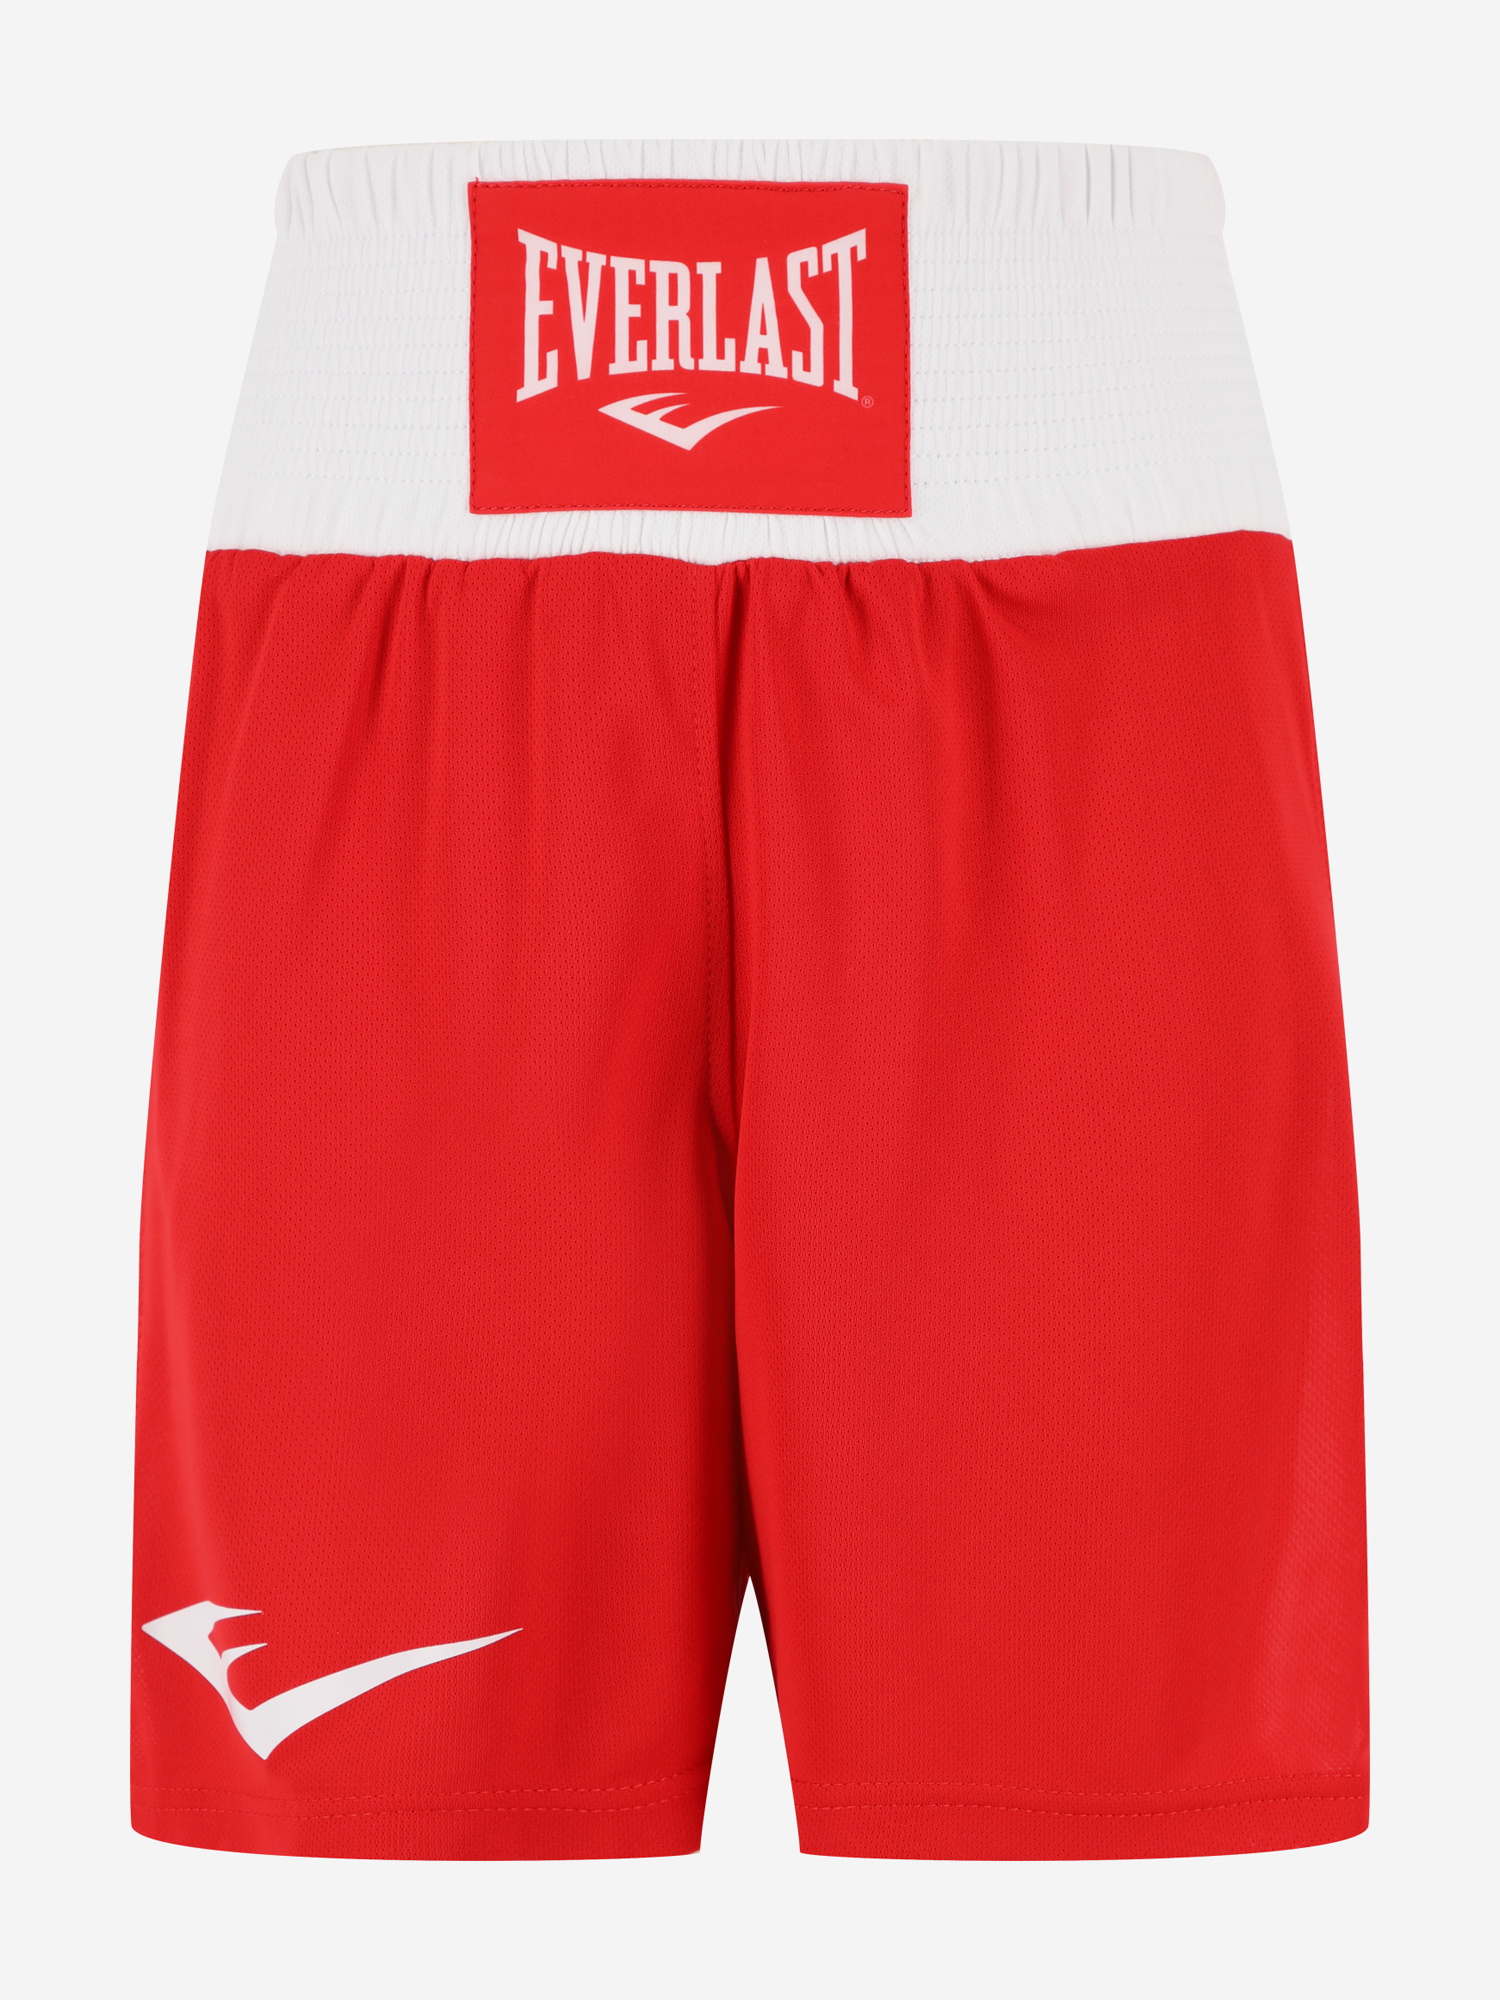 Шорты для бокса детские Everlast Elite, Красный шапка everlast wagner light синий